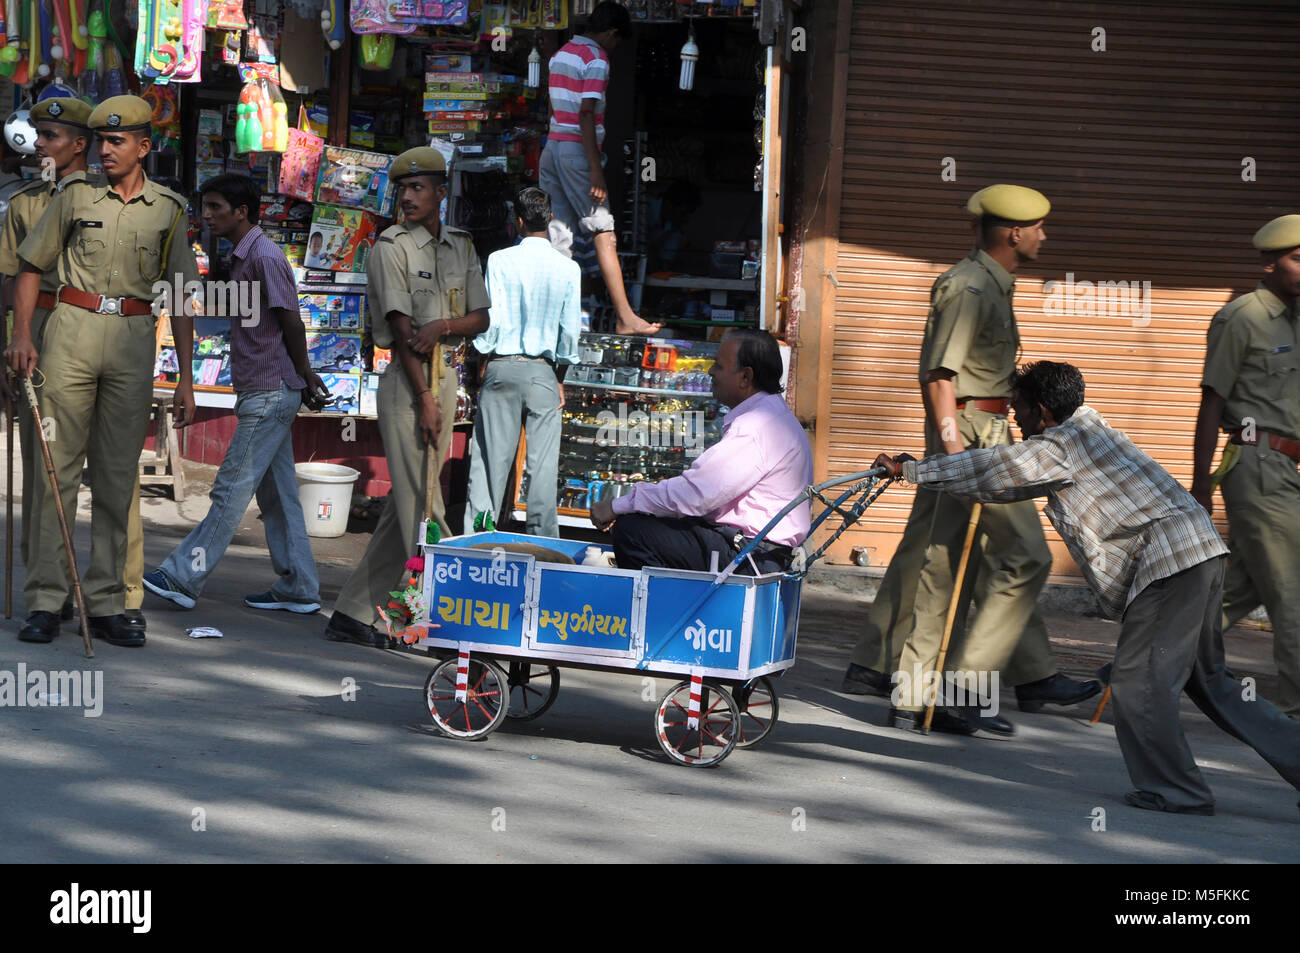 Homme assis dans le panier, mount abu, Rajasthan, Inde, Asie Banque D'Images